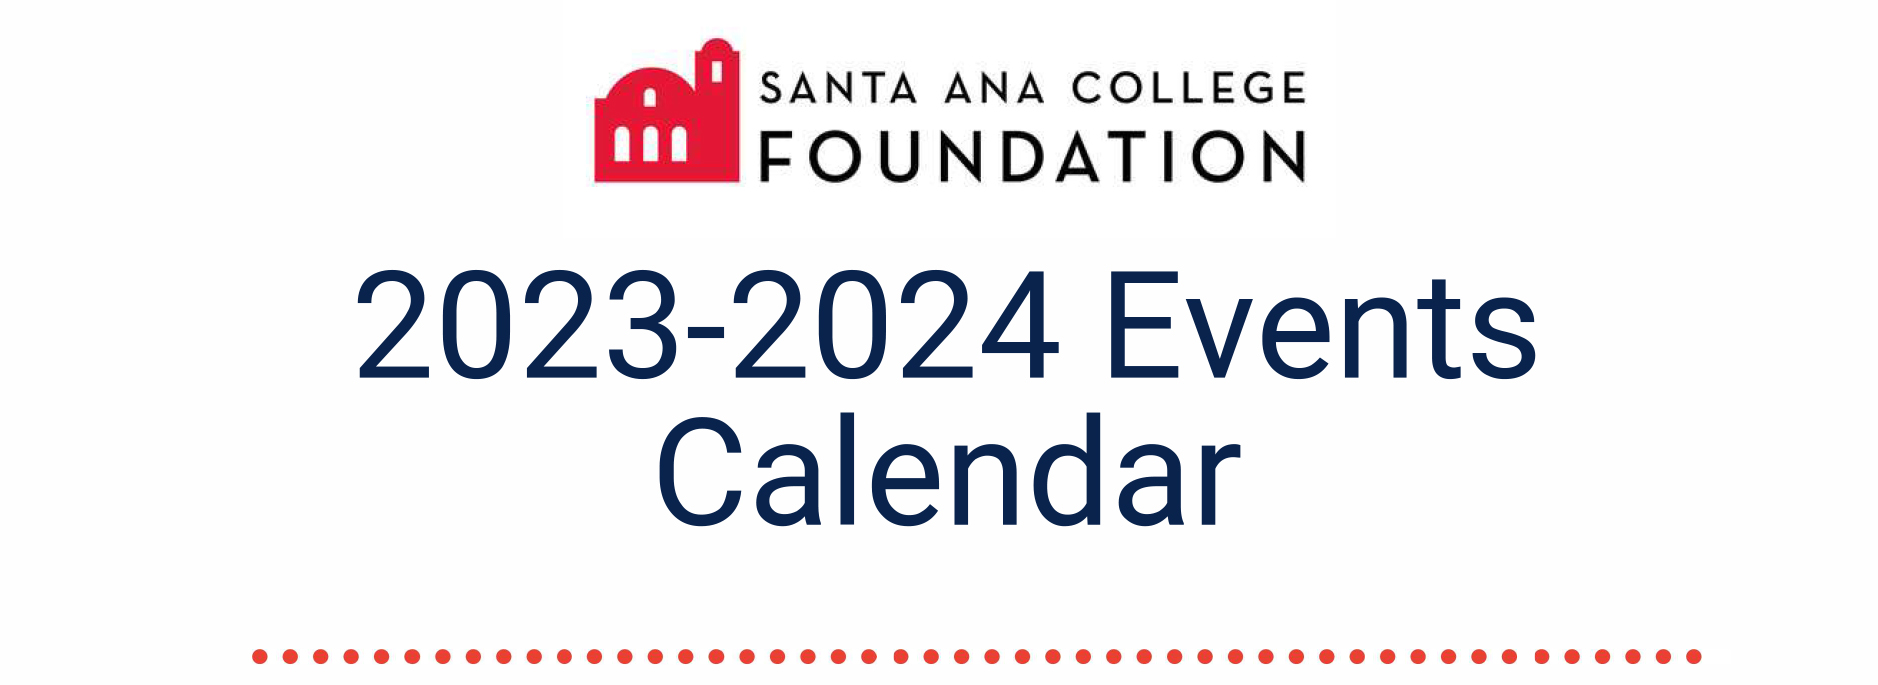 2023-2024 Calendar Events